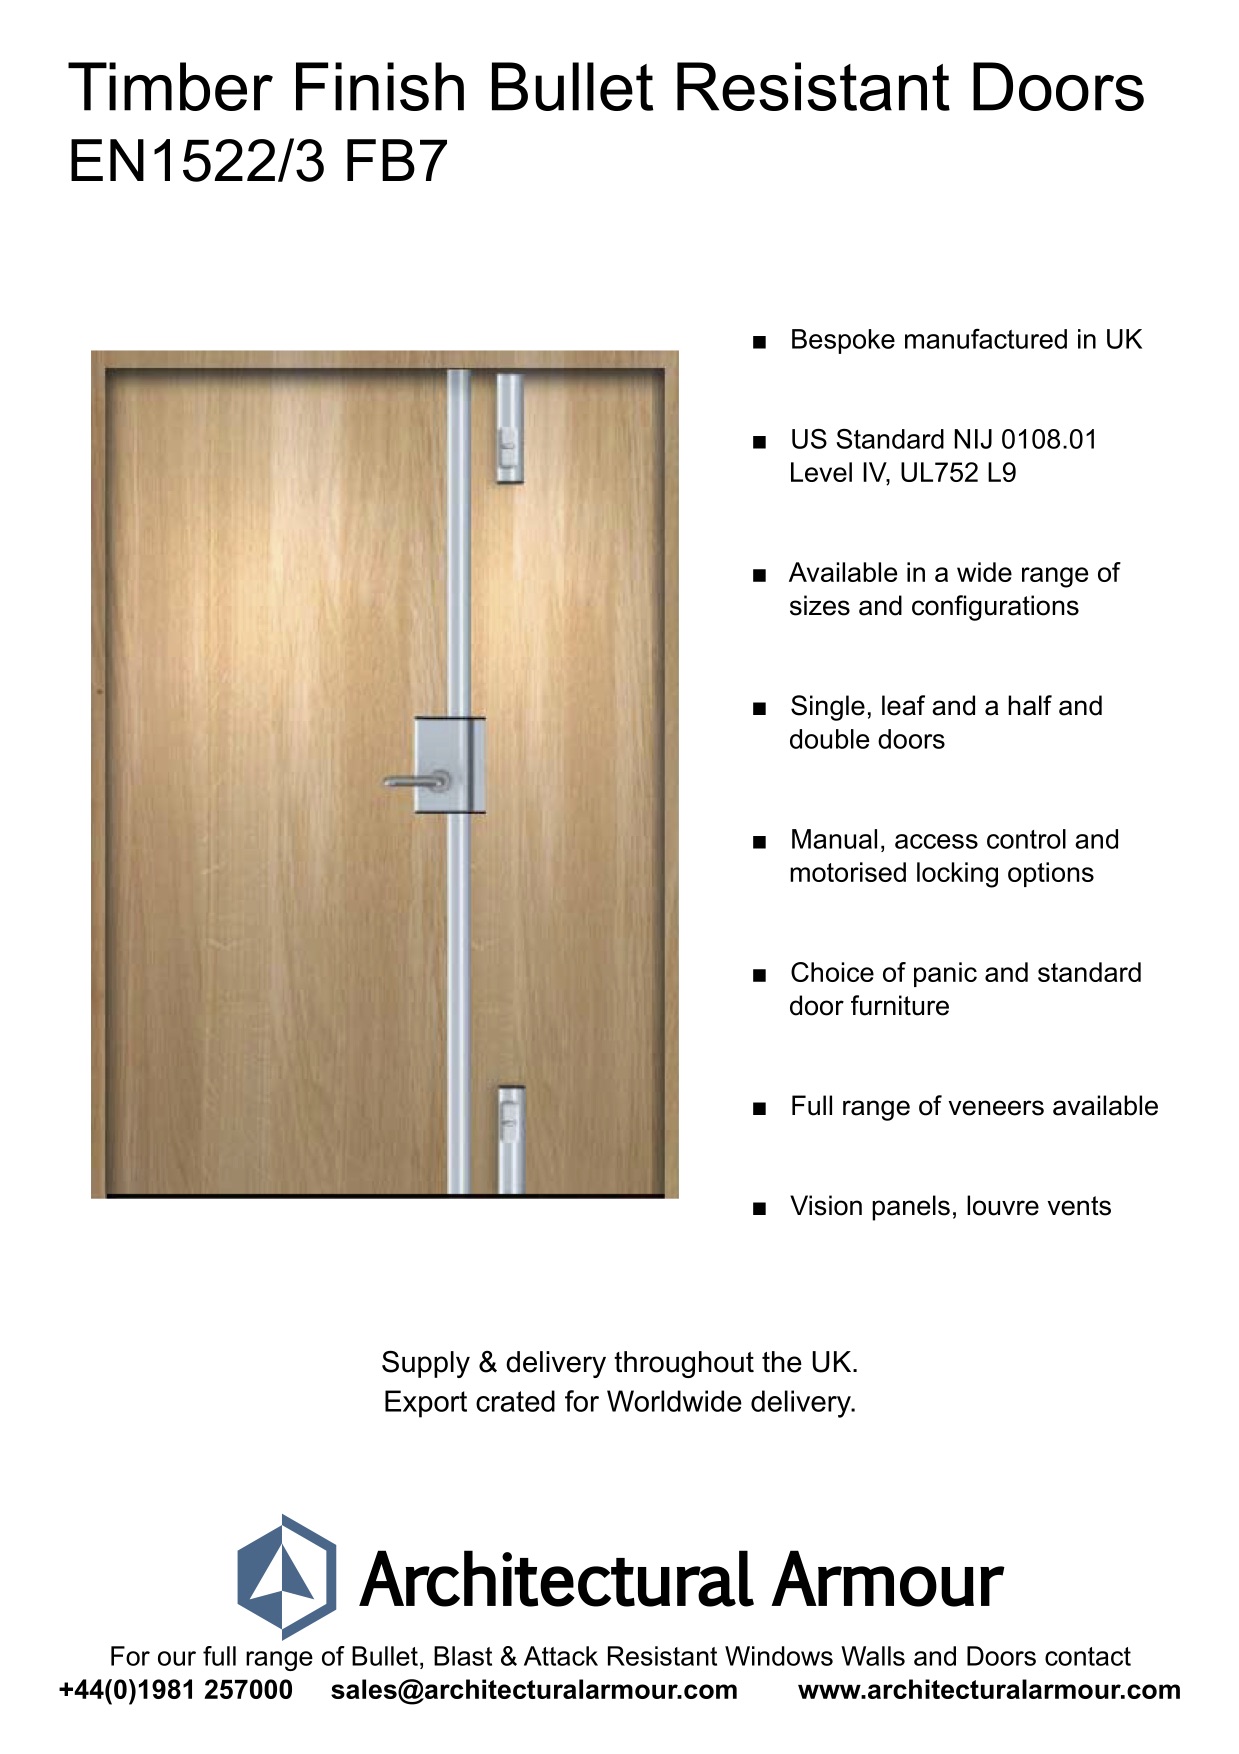 Bullet-Resistant-Timber-Finish-Doors-EN1522-3-FB7